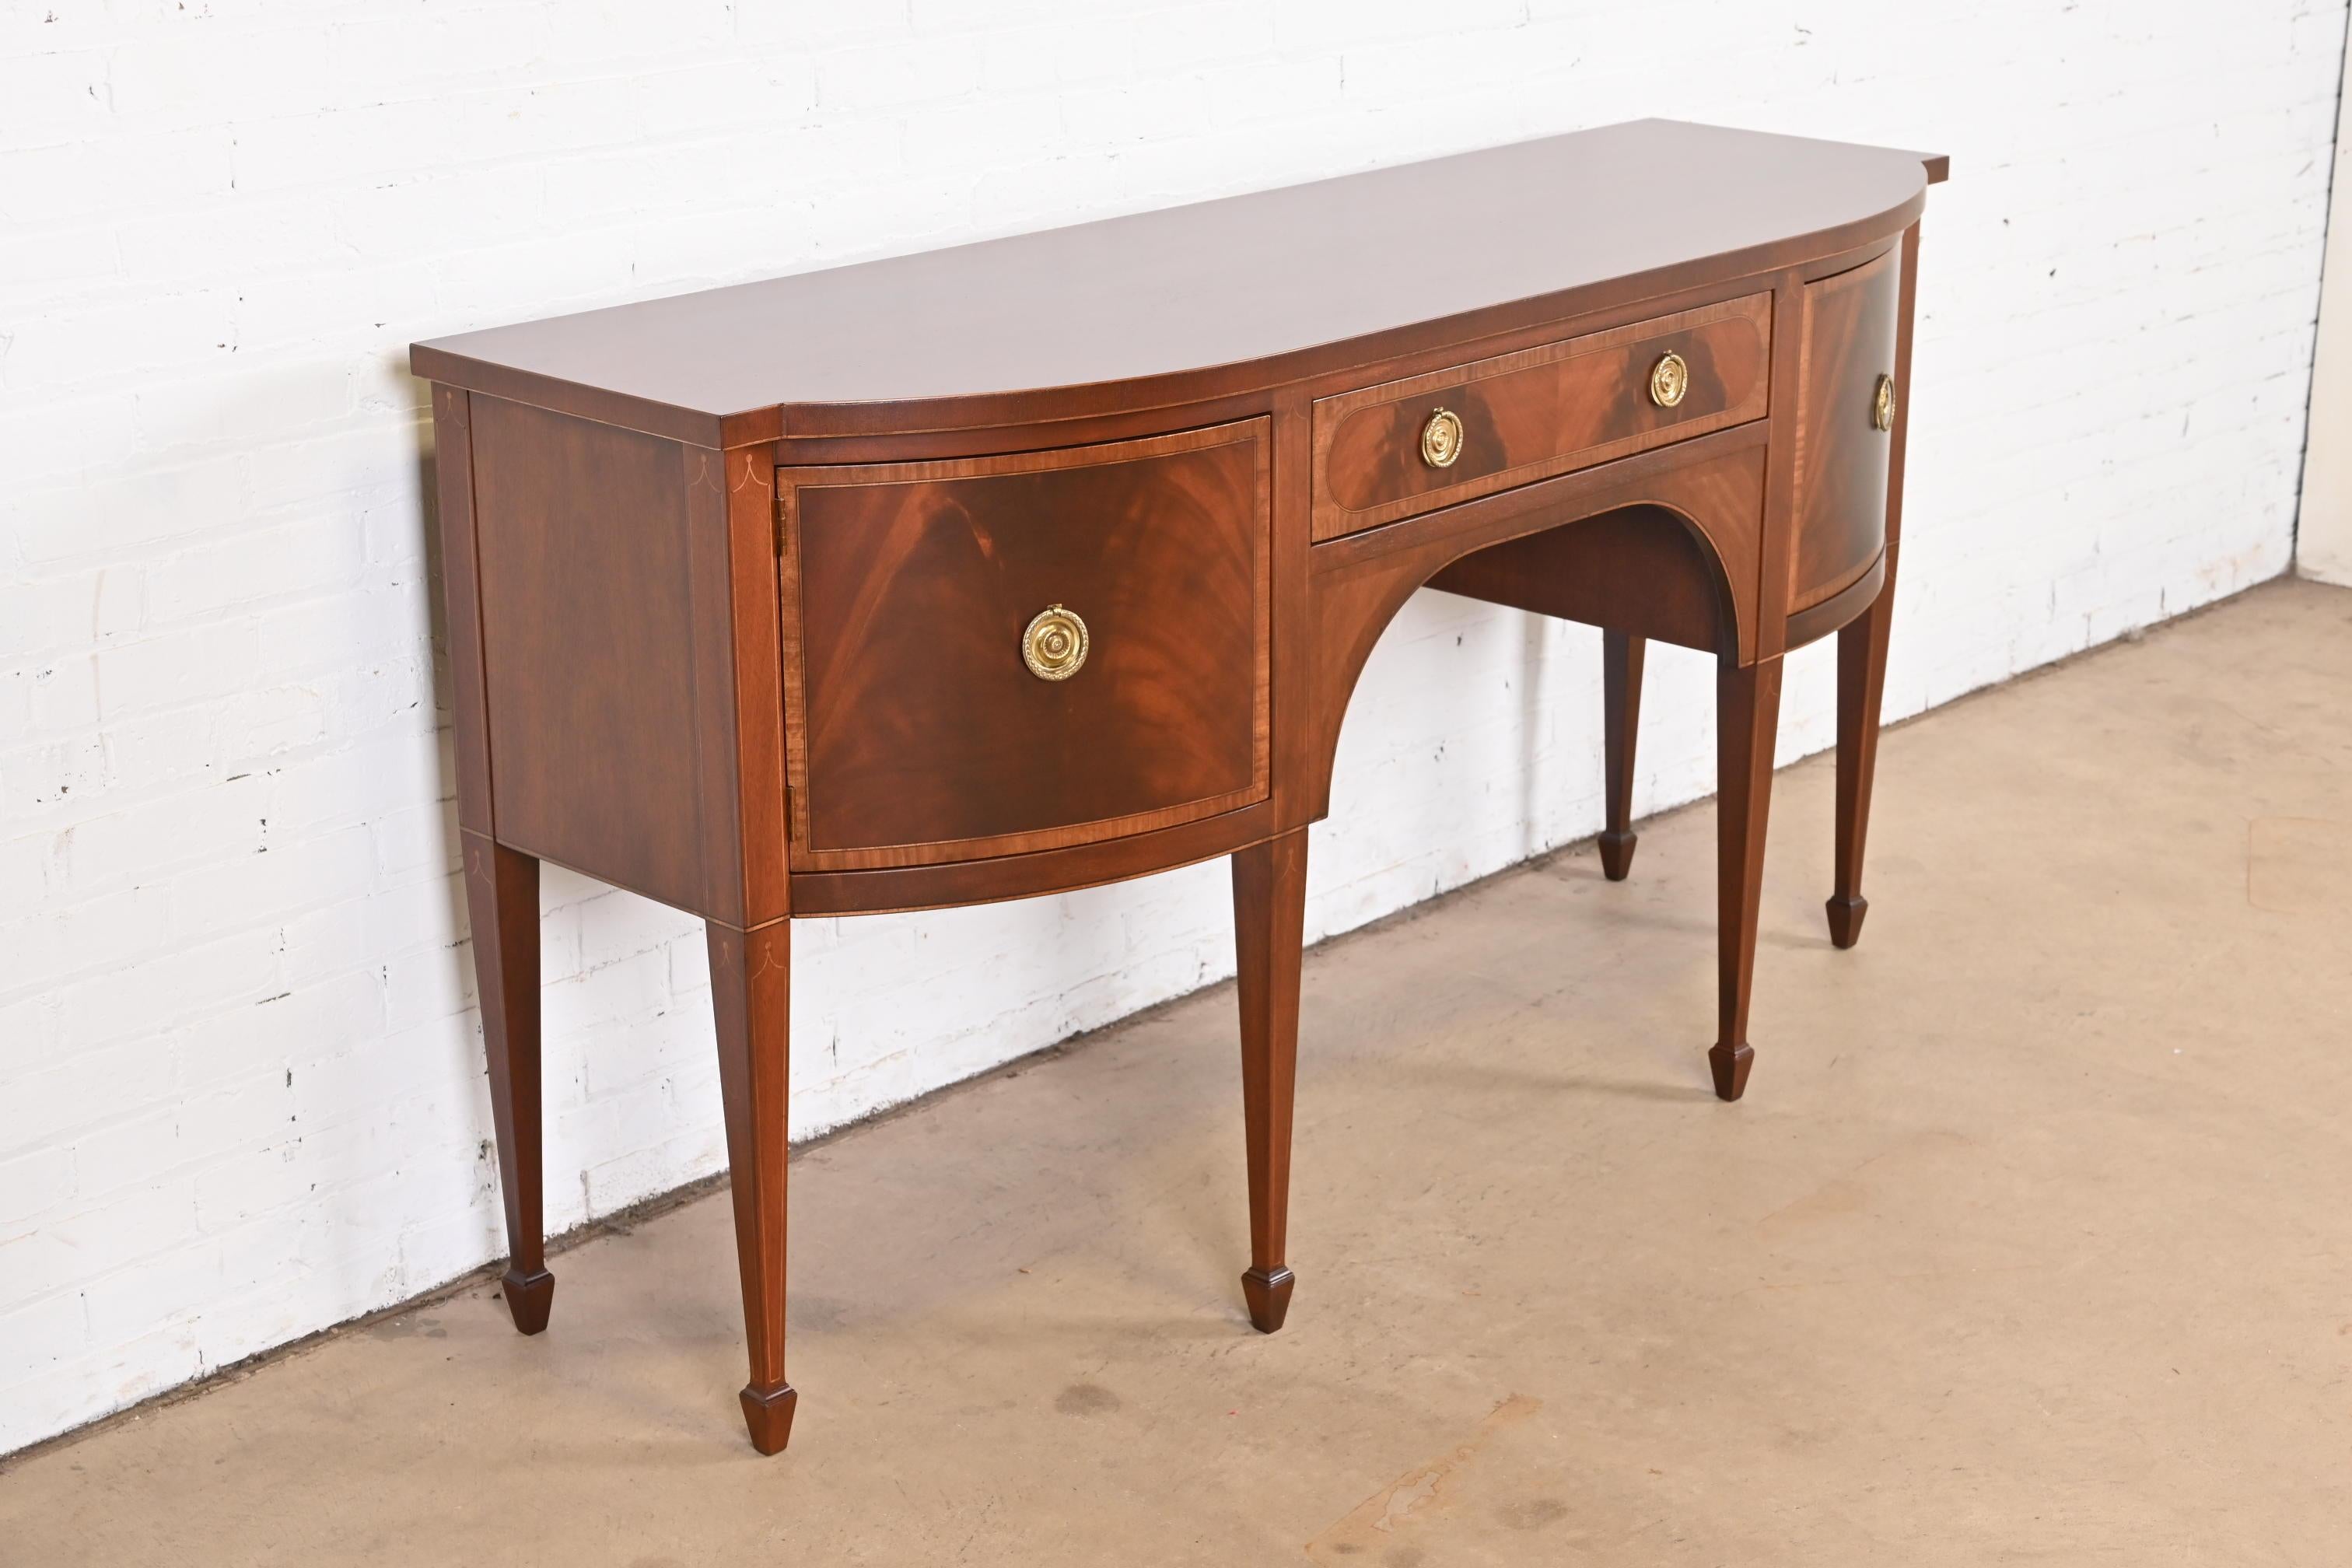 20th Century Baker Furniture Hepplewhite Mahogany and Inlaid Satinwood Sideboard, Refinished